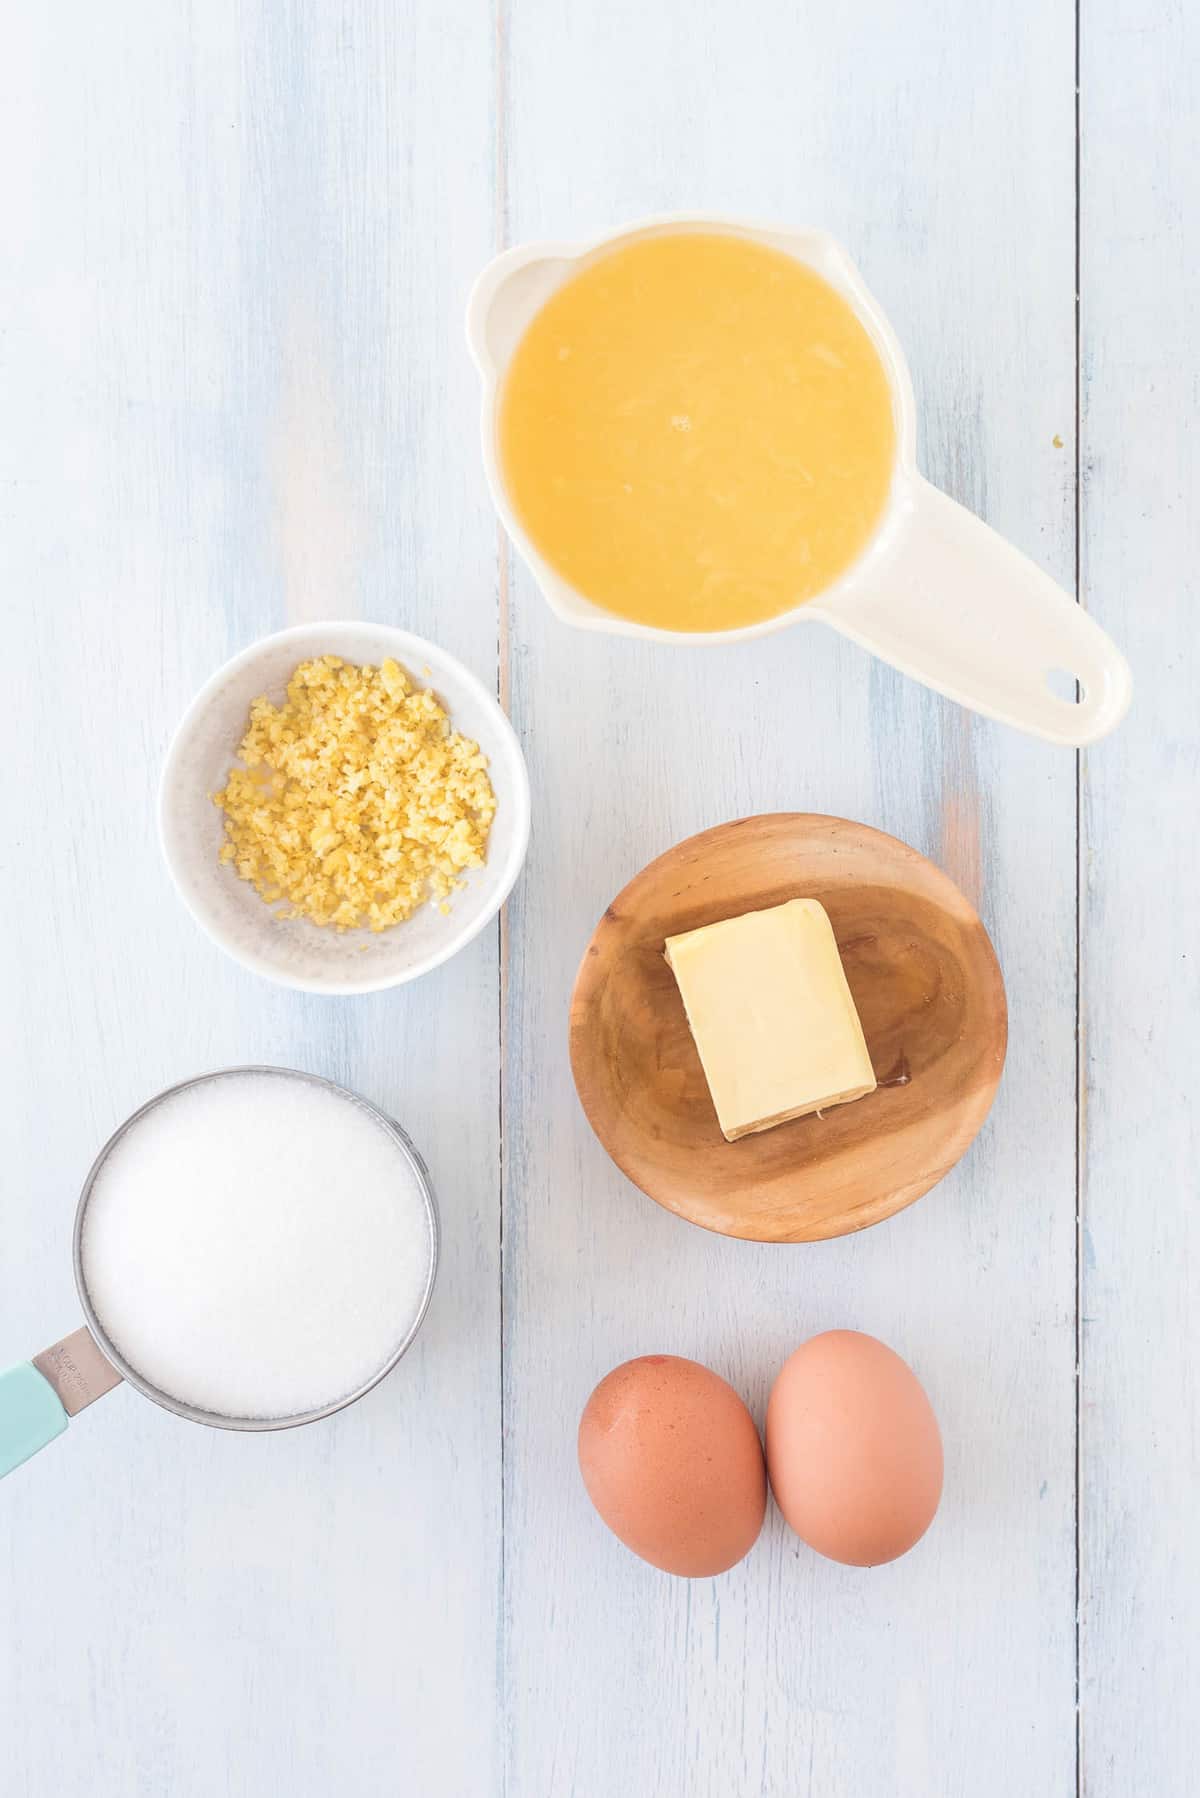 Overhead view of ingredients needed: butter, sugar, lemon juice, lemon zest, eggs.